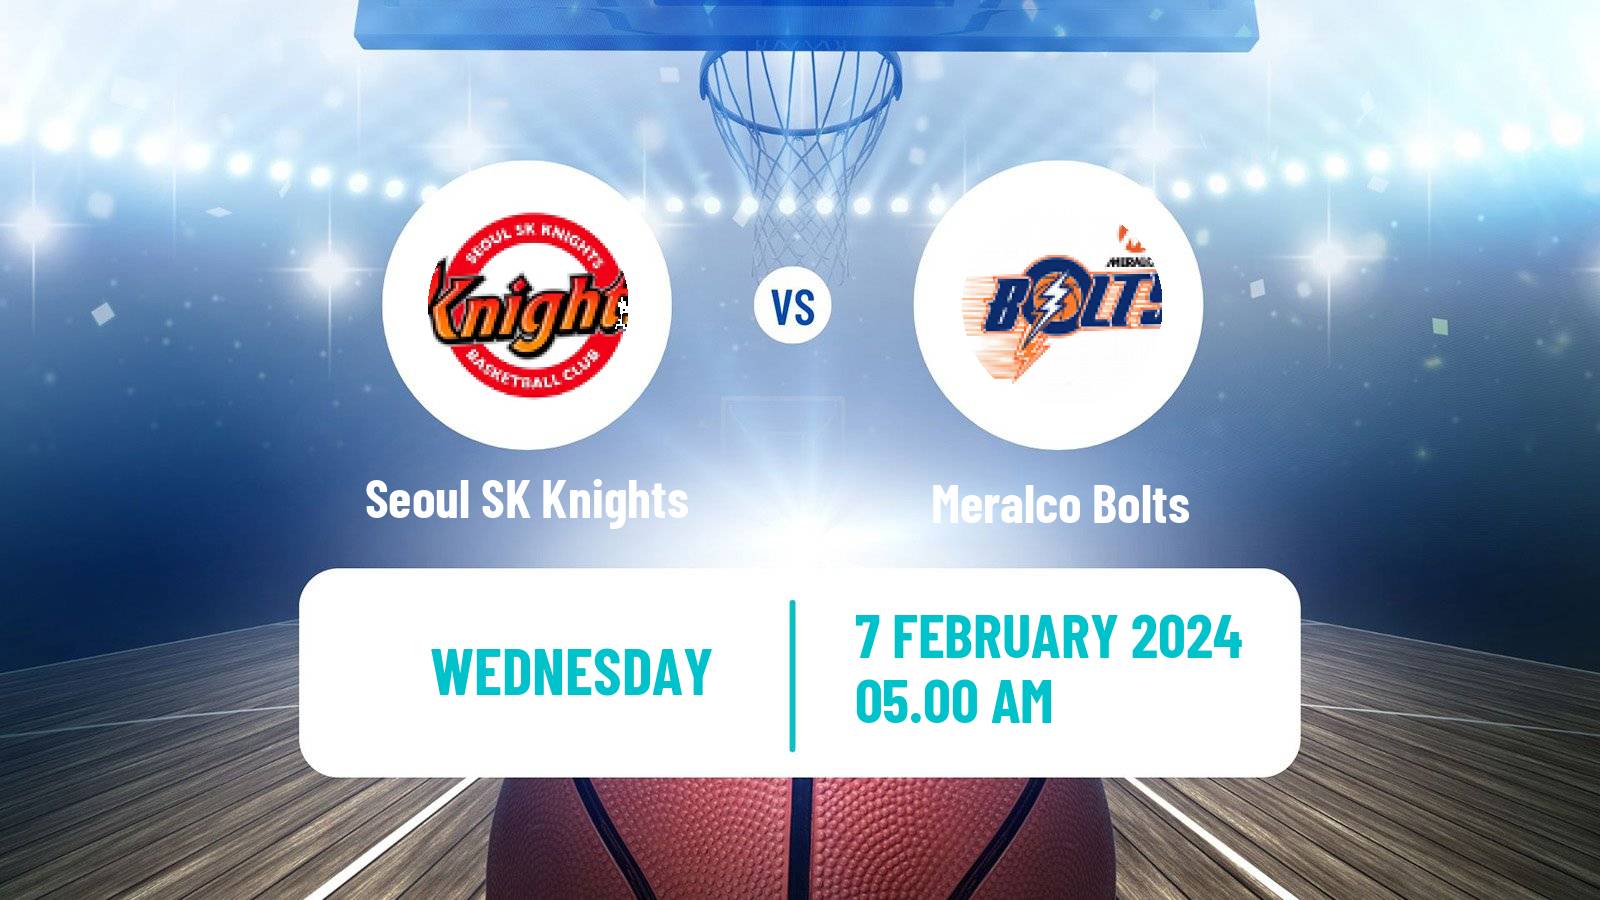 Basketball EASL Basketball Seoul SK Knights - Meralco Bolts